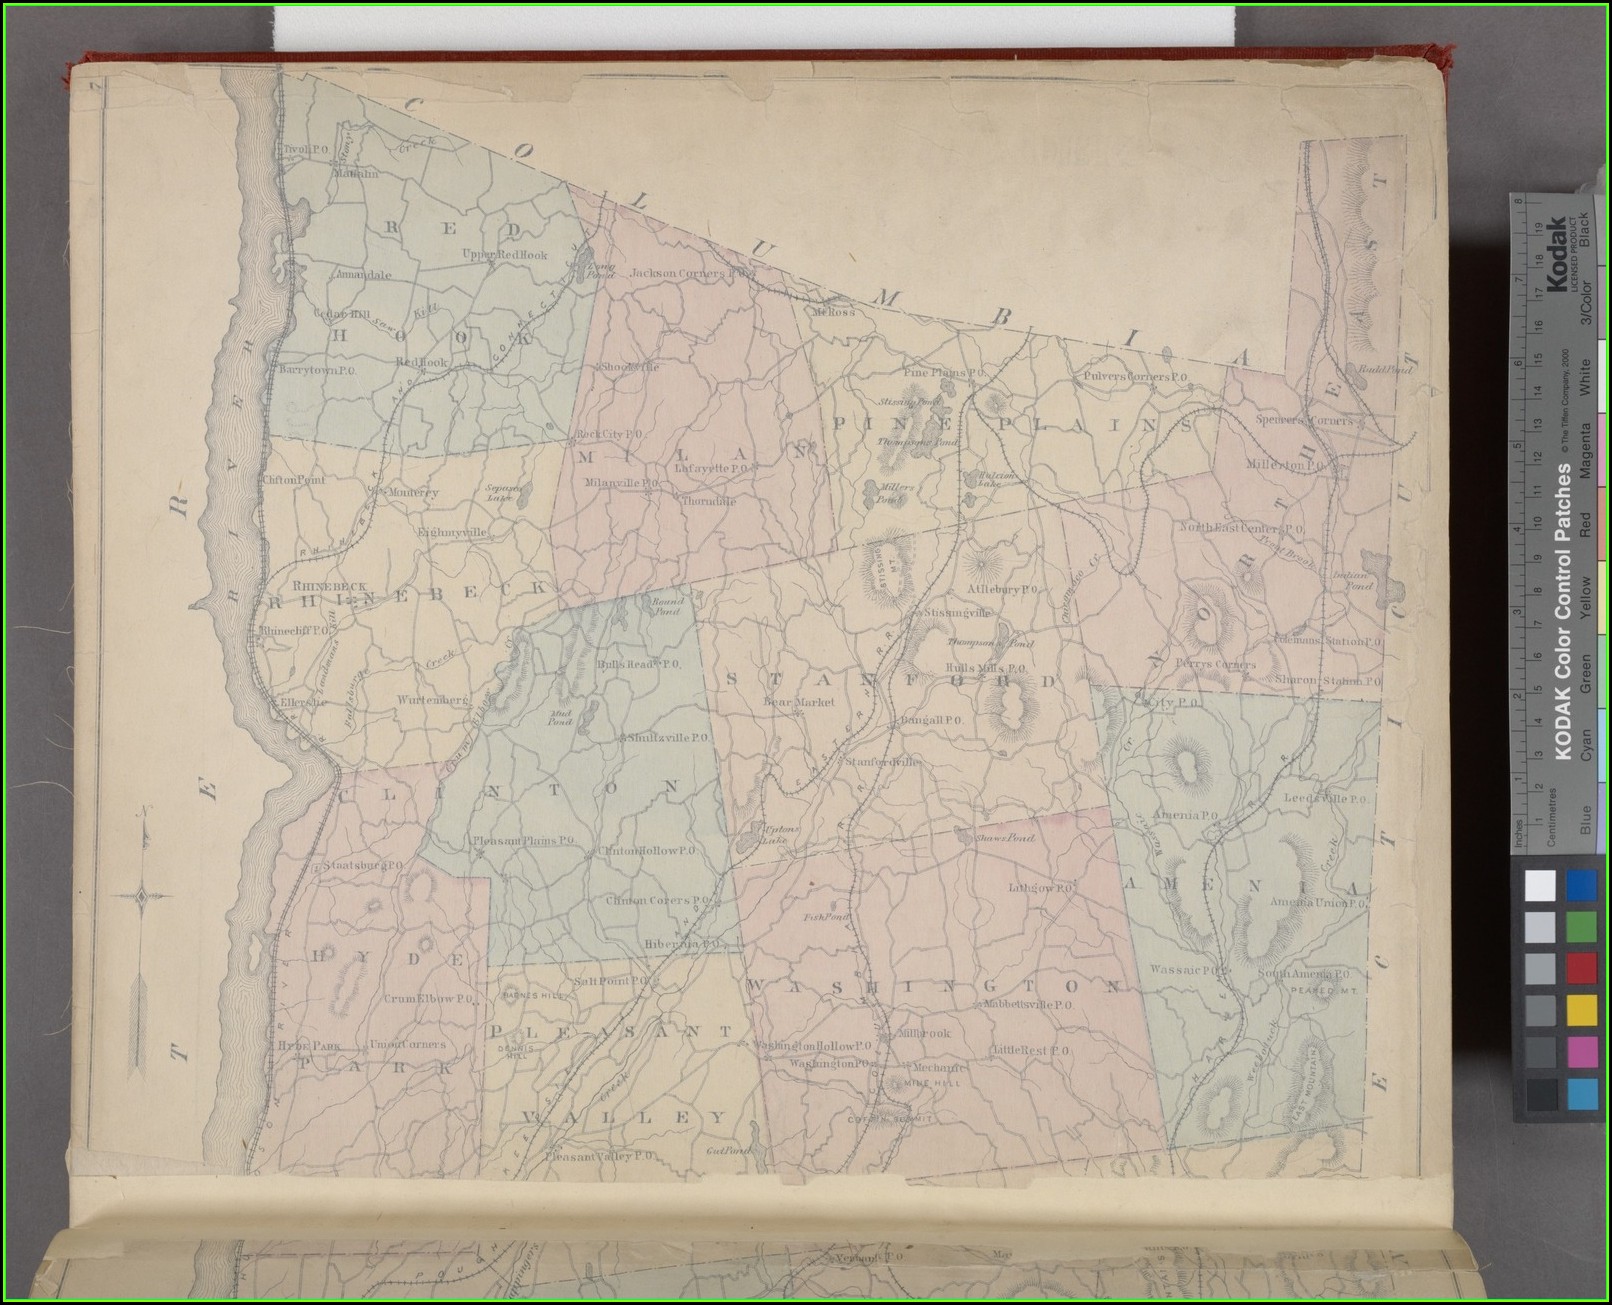 Map Of Dutchess County New York